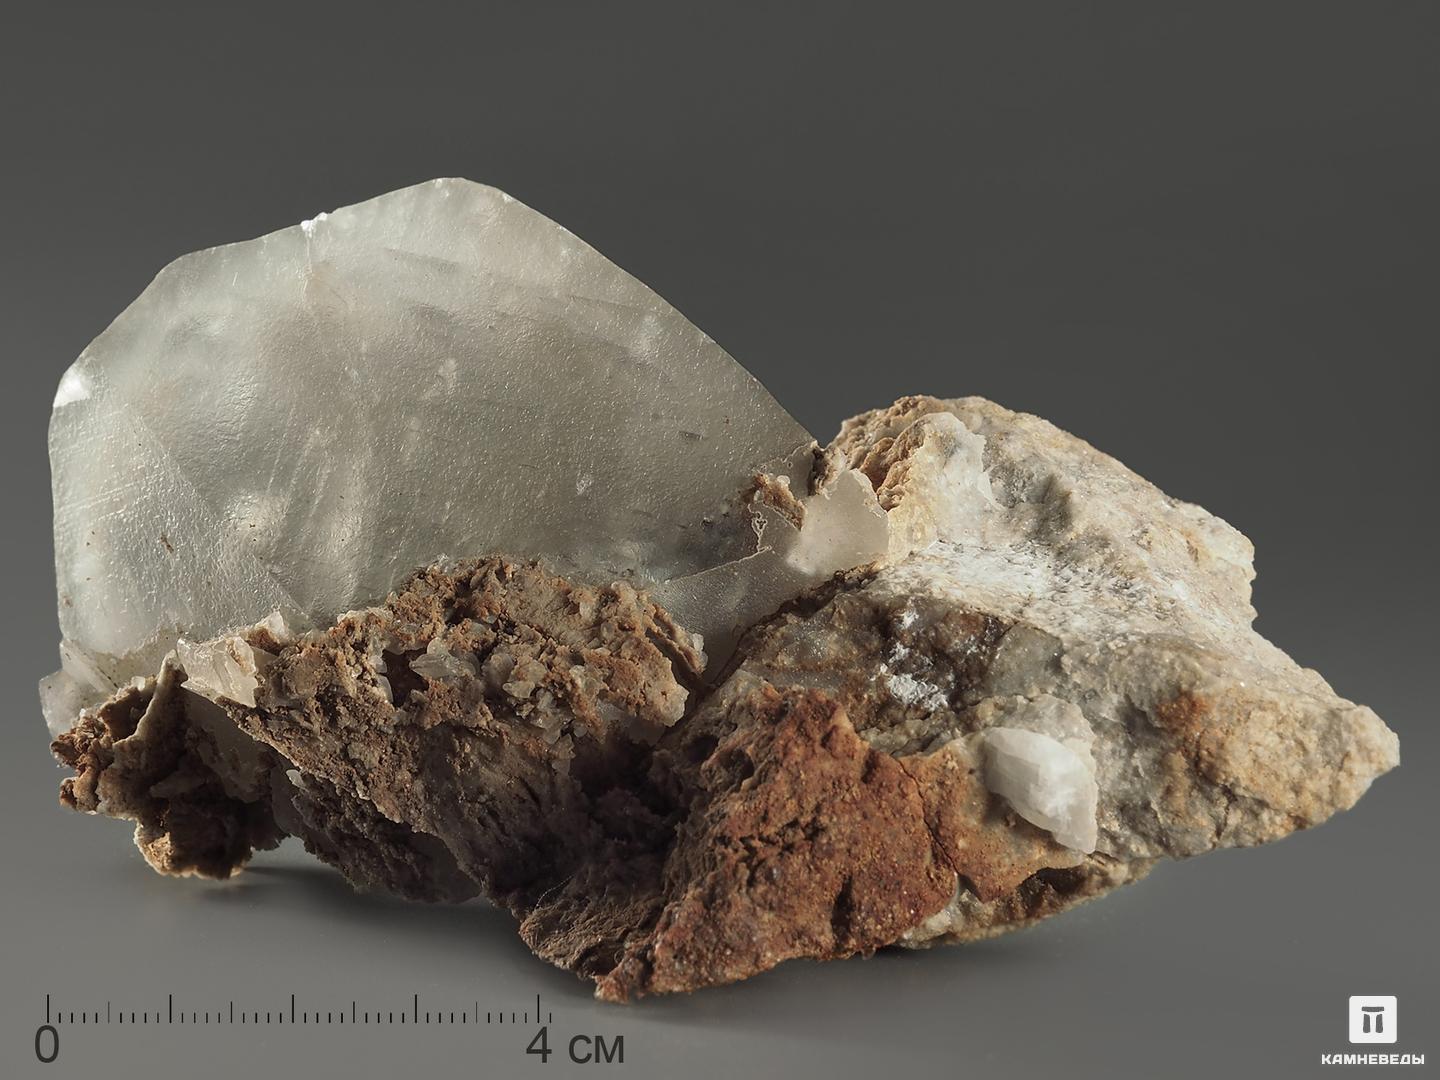   Камневеды Кристалл кальцита на породе, 11х6,7х5,5 см